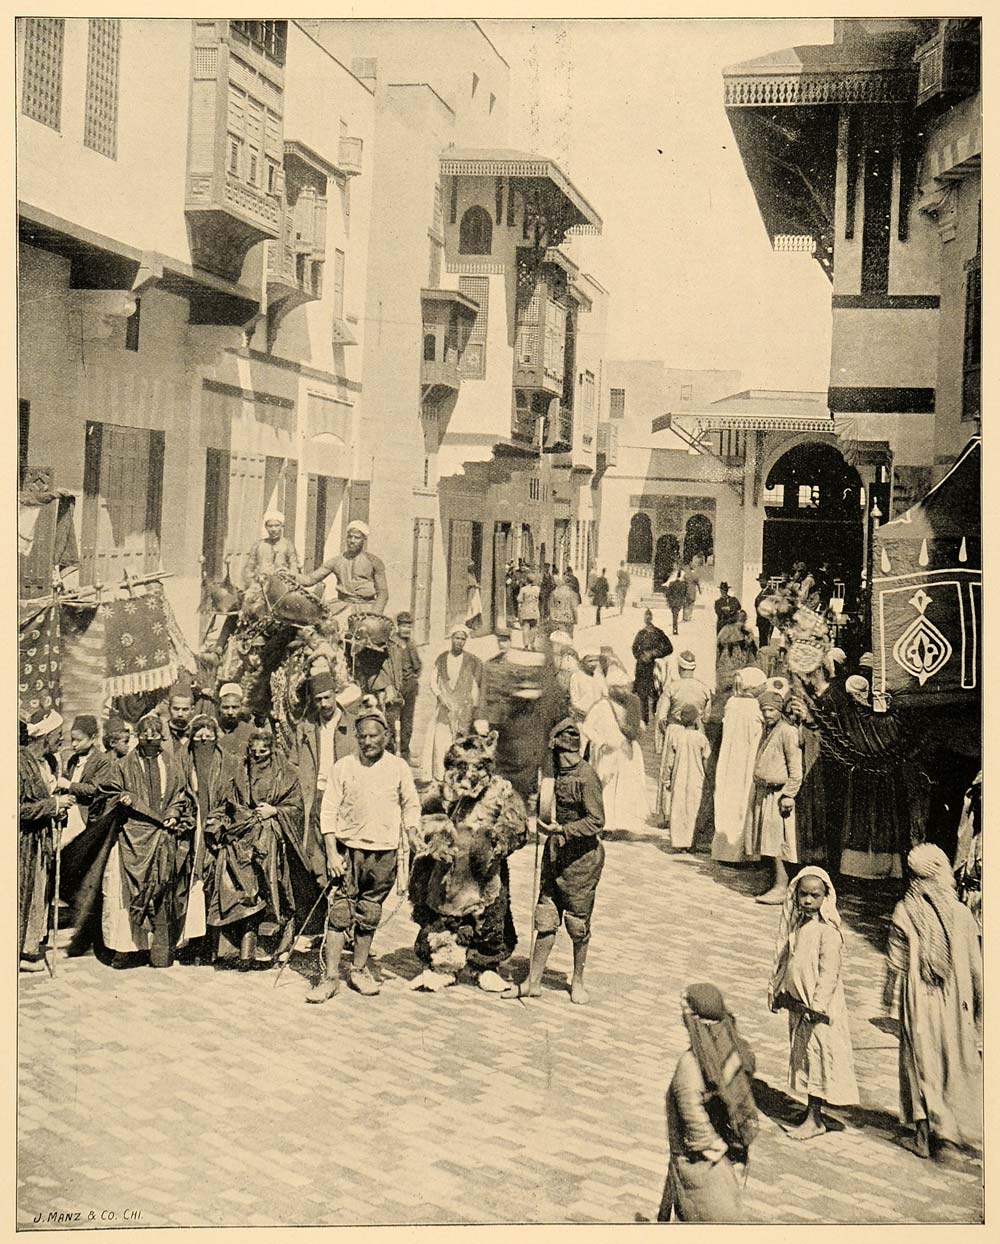 1893 Chicago World's Fair Cairo St. Wedding Procession ORIGINAL HISTORIC IMAGE